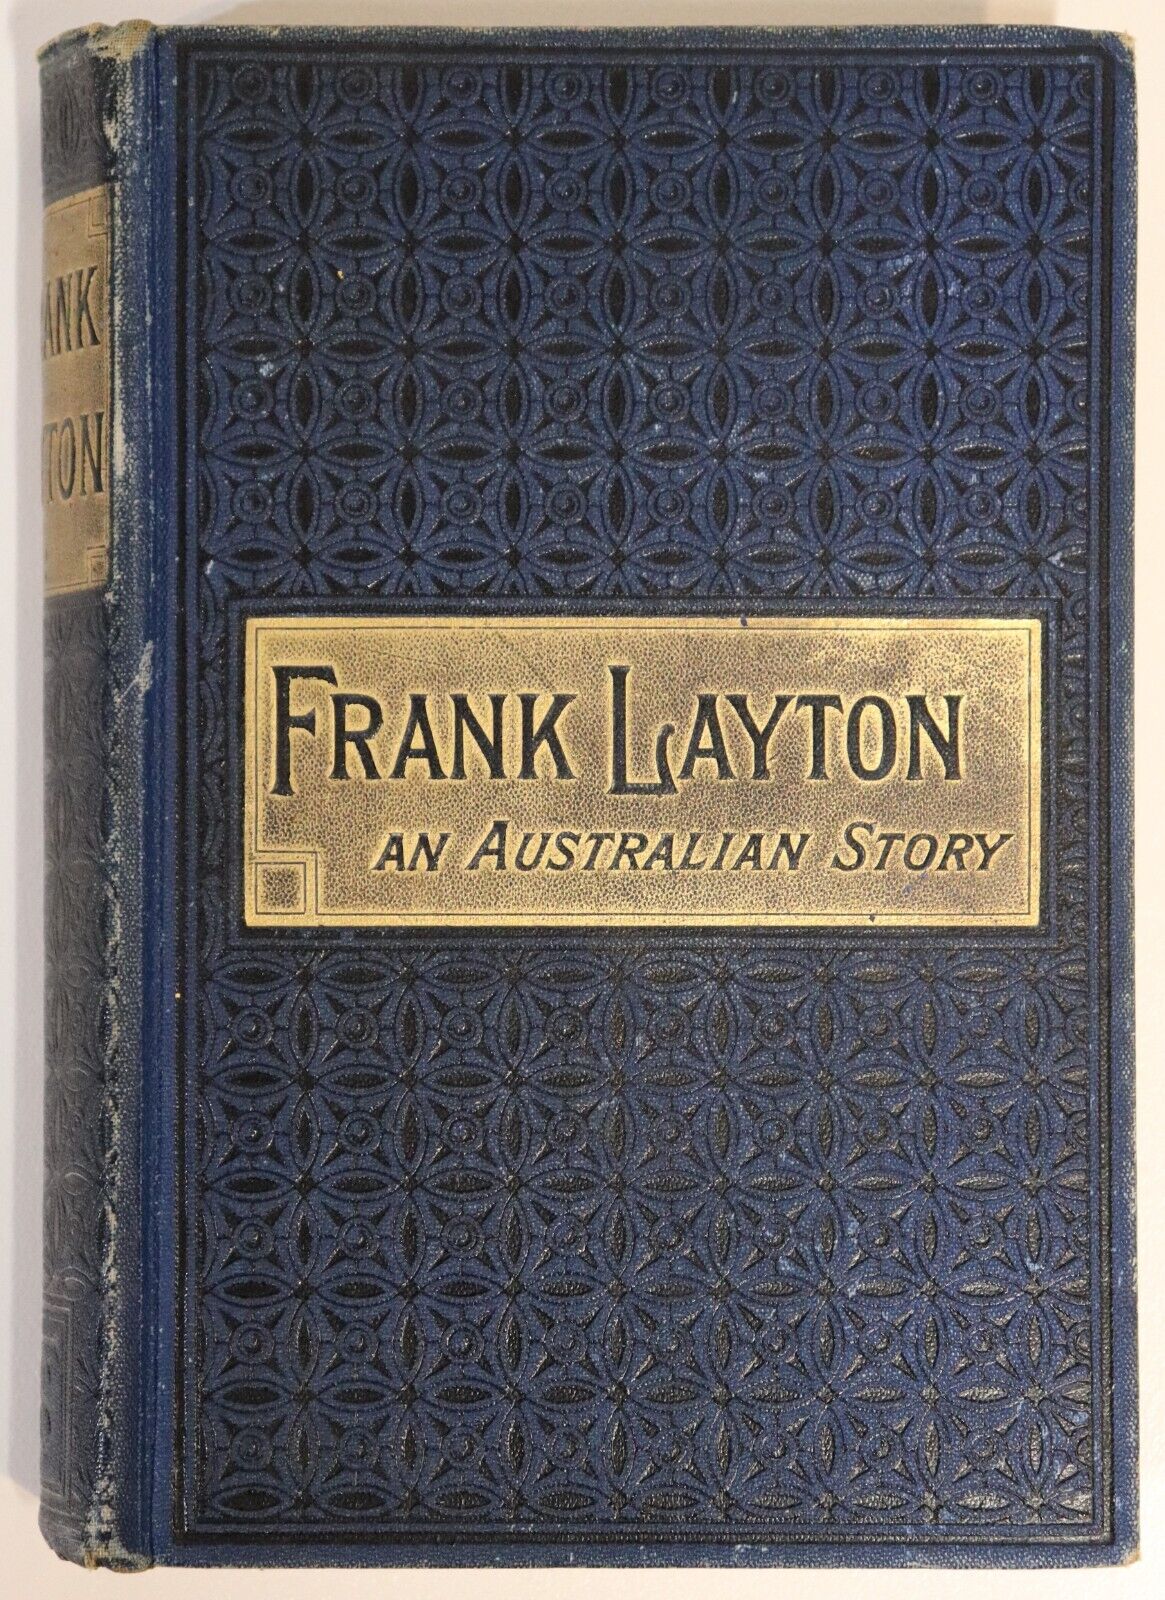 c1900 Frank Layton: An Australian Story Antique Australian Fiction Book